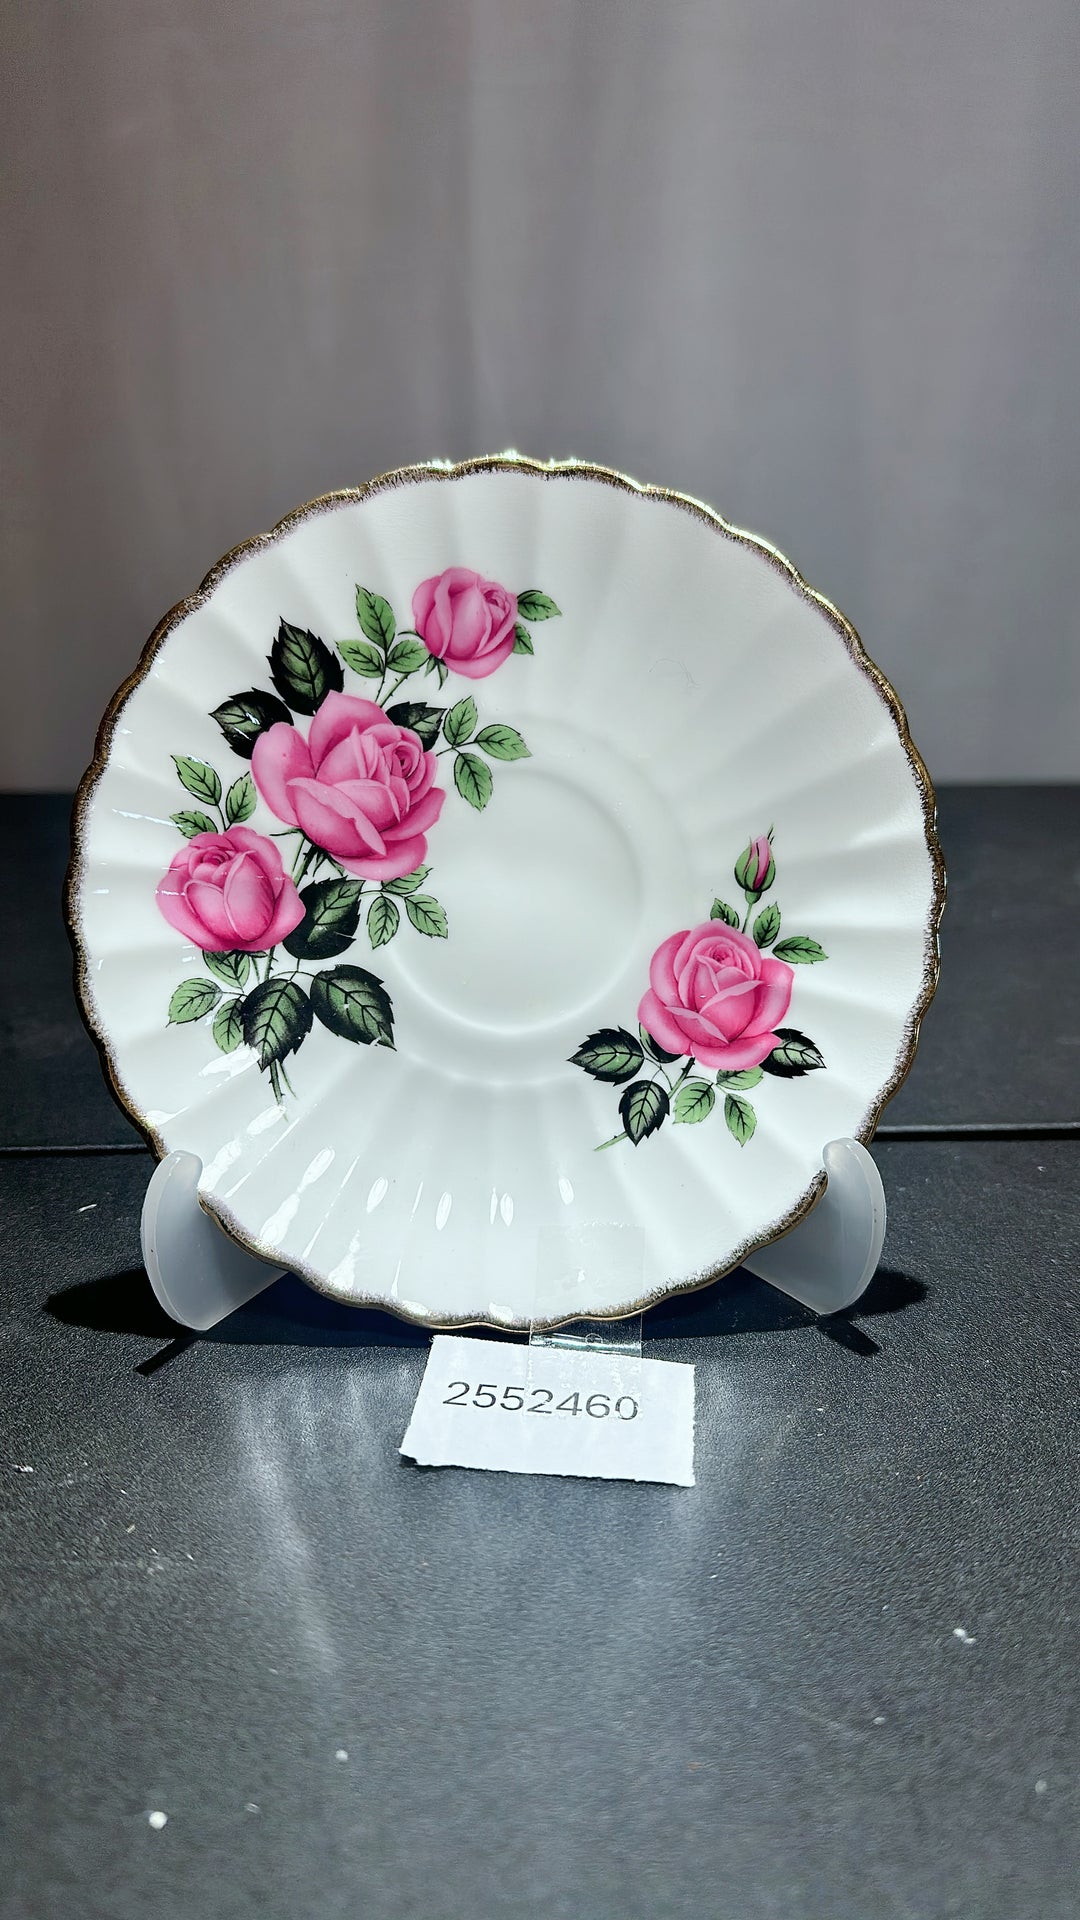 Antique Plate 2552460